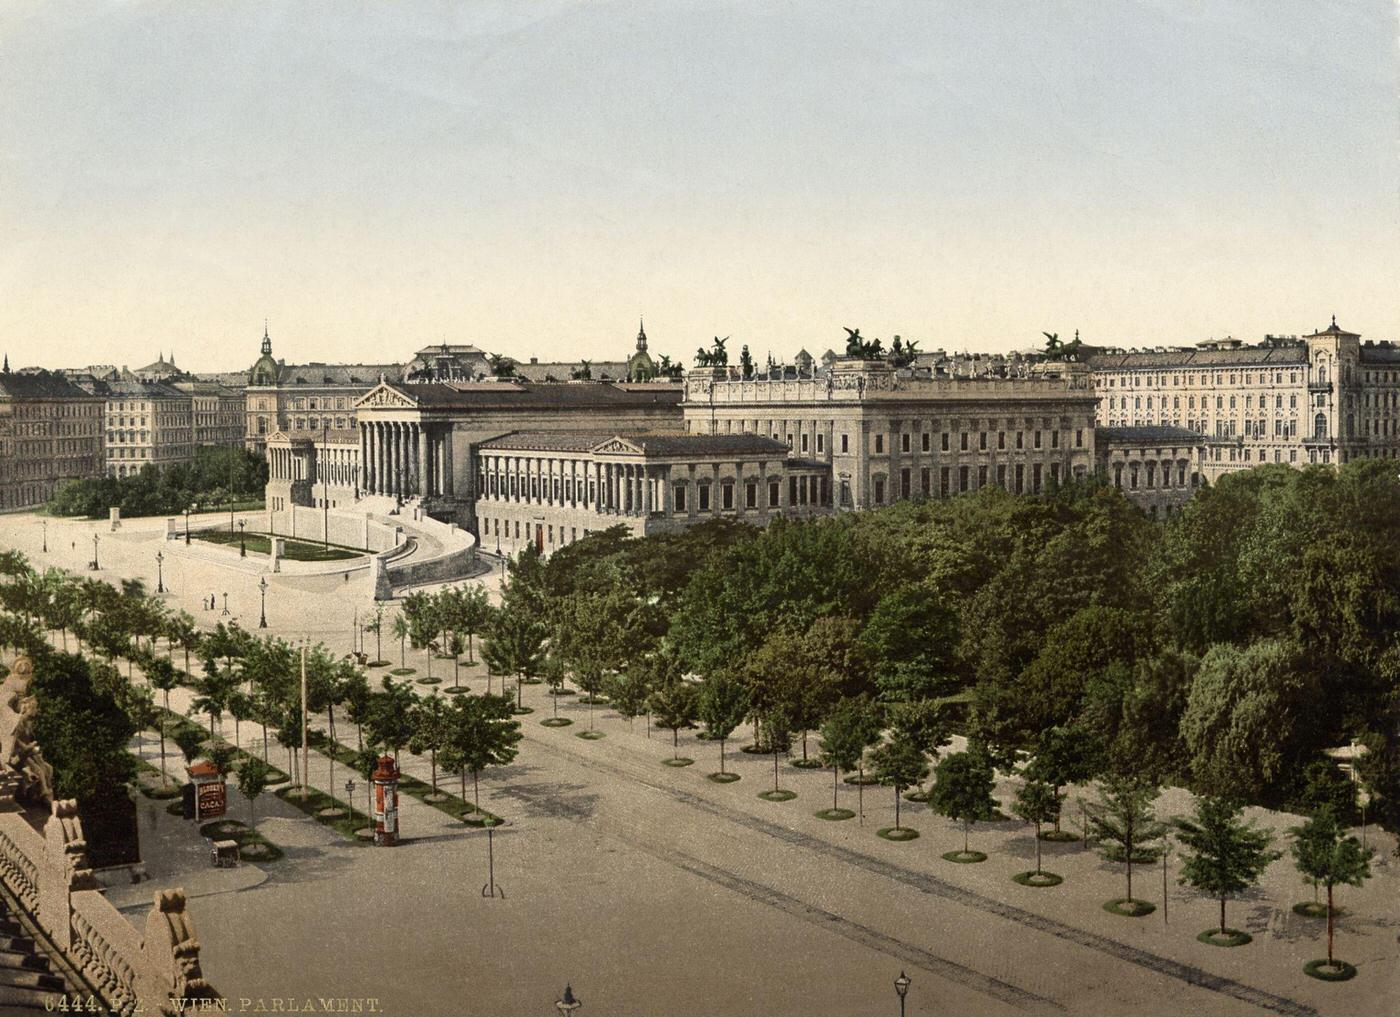 Austro-Hungarian Empire (Austria-Hungary), Austria, VIENNA, the parliament, 1901